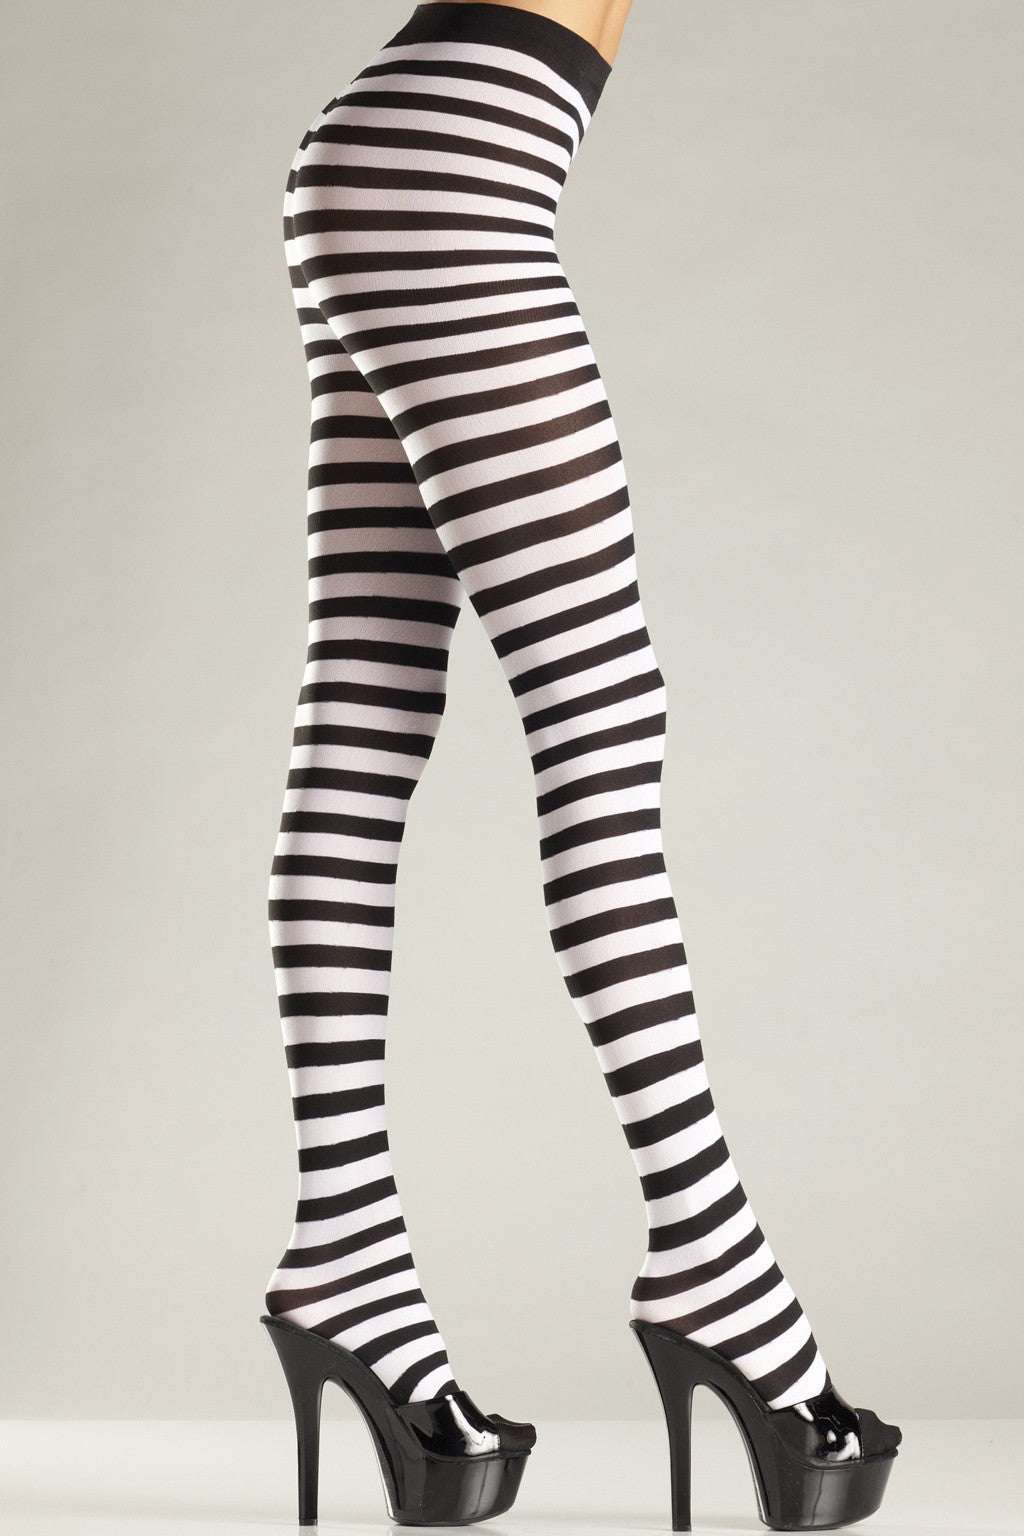 Black and White Stripe Stockings